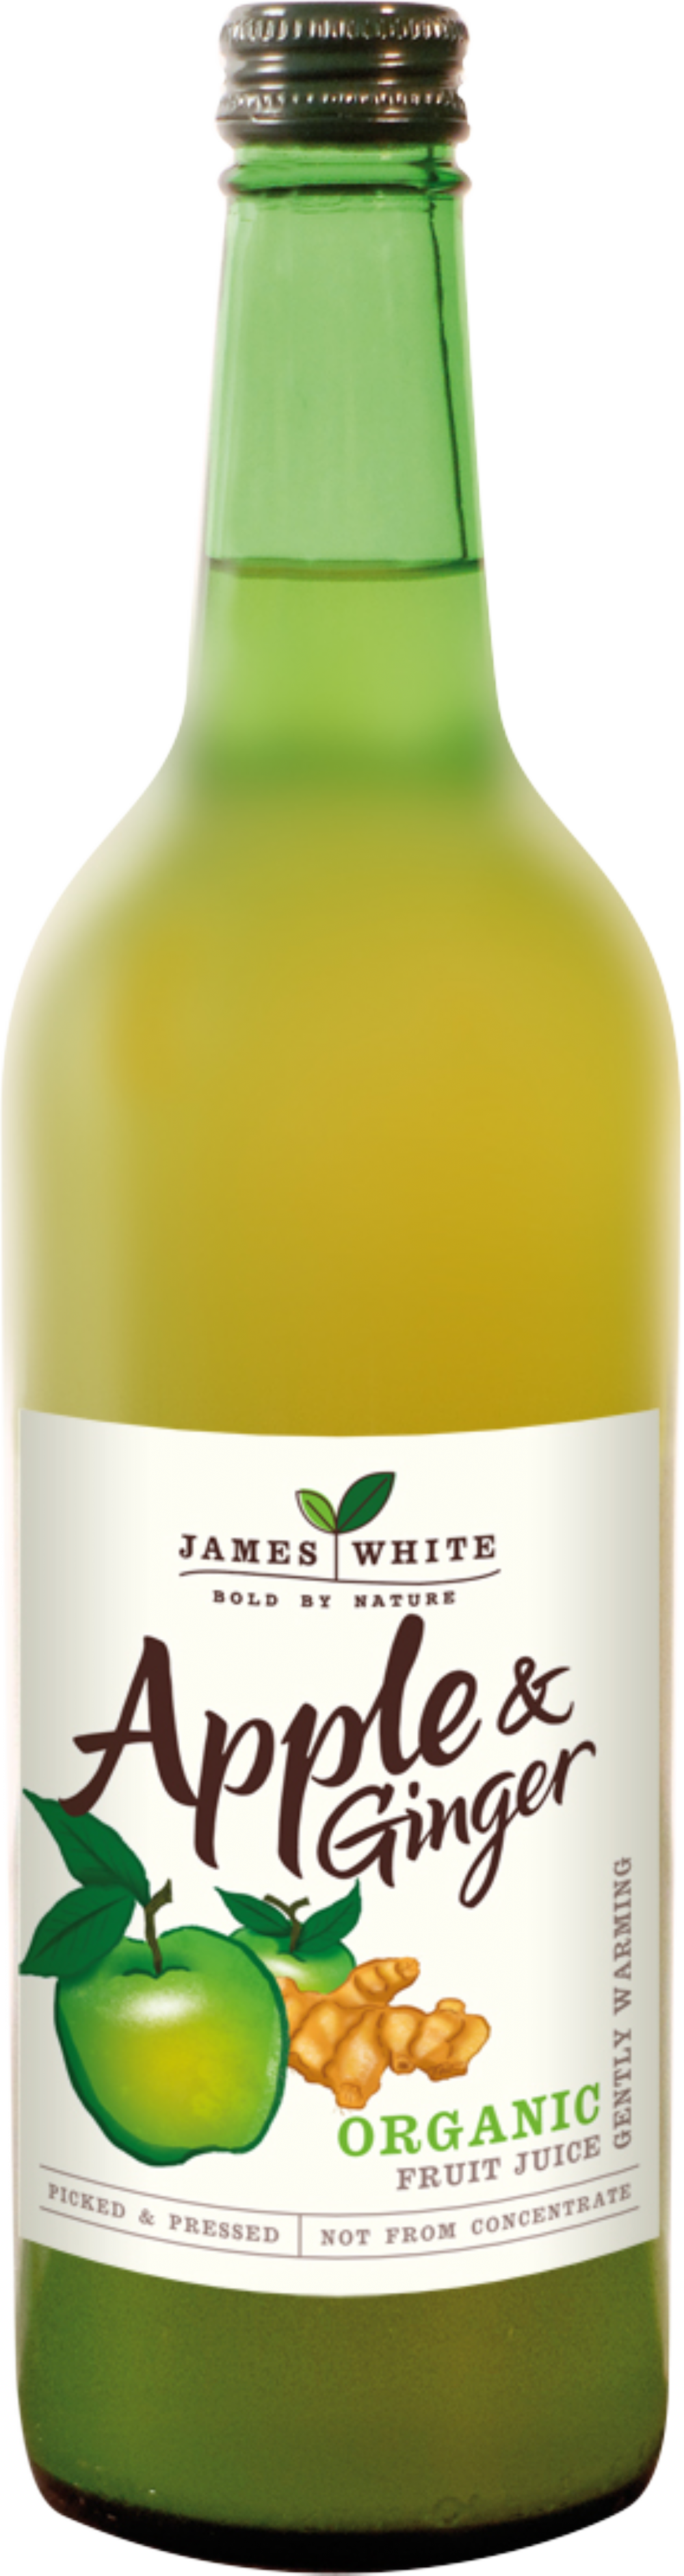 JAMES WHITE Organic Apple & Ginger Juice 75cl